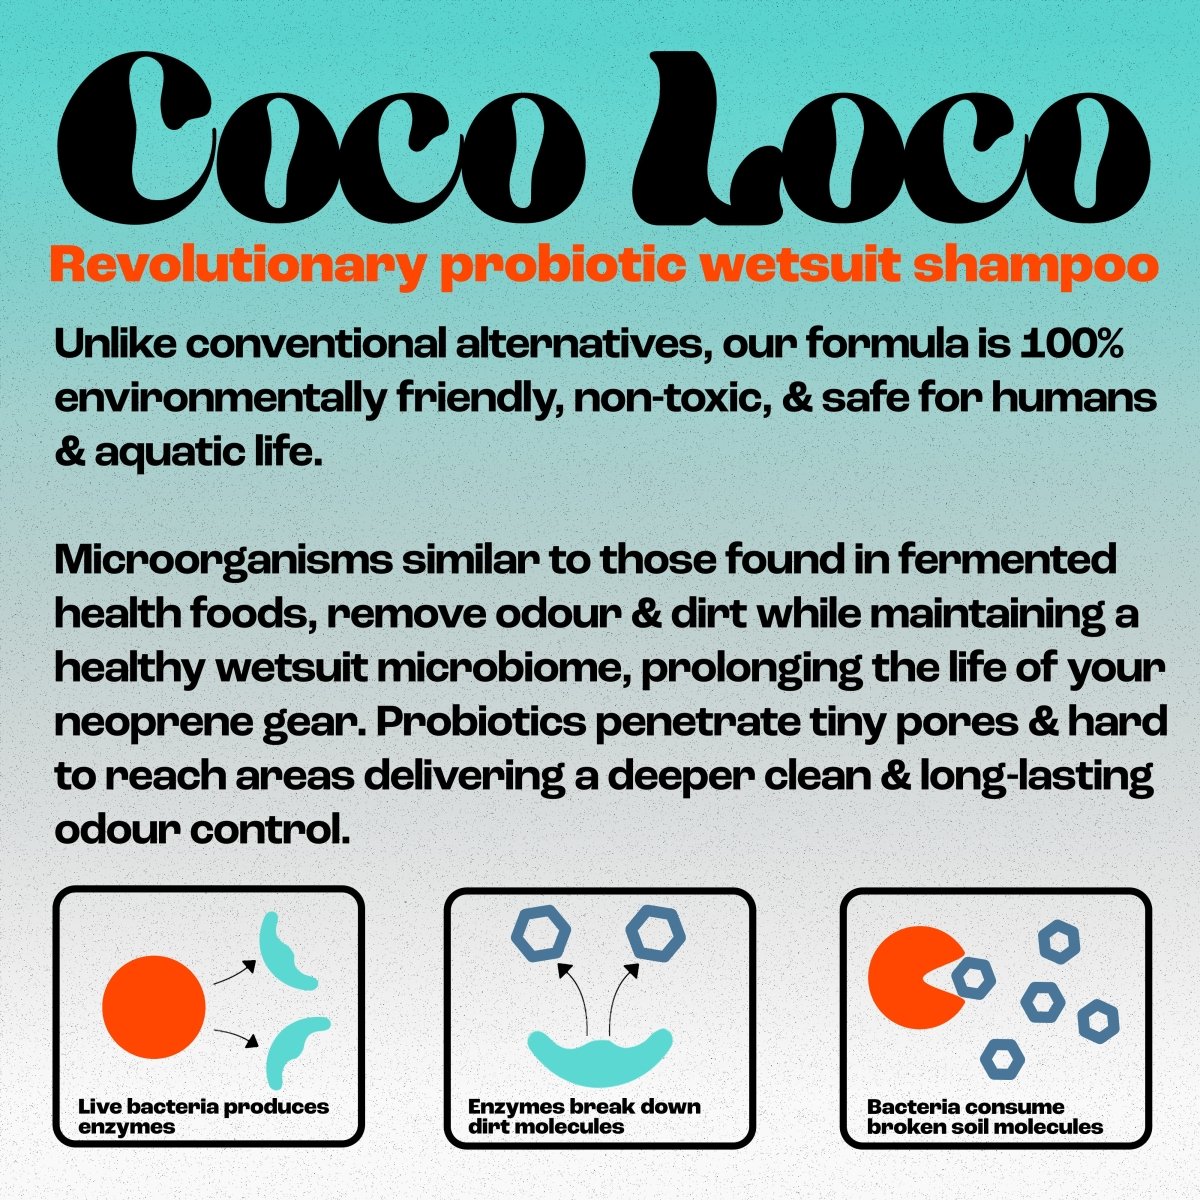 Coco Loco Wetsuit Cleaner Shampoo & Deodoriser With Refill (5.25 Litre) - Coco Loco